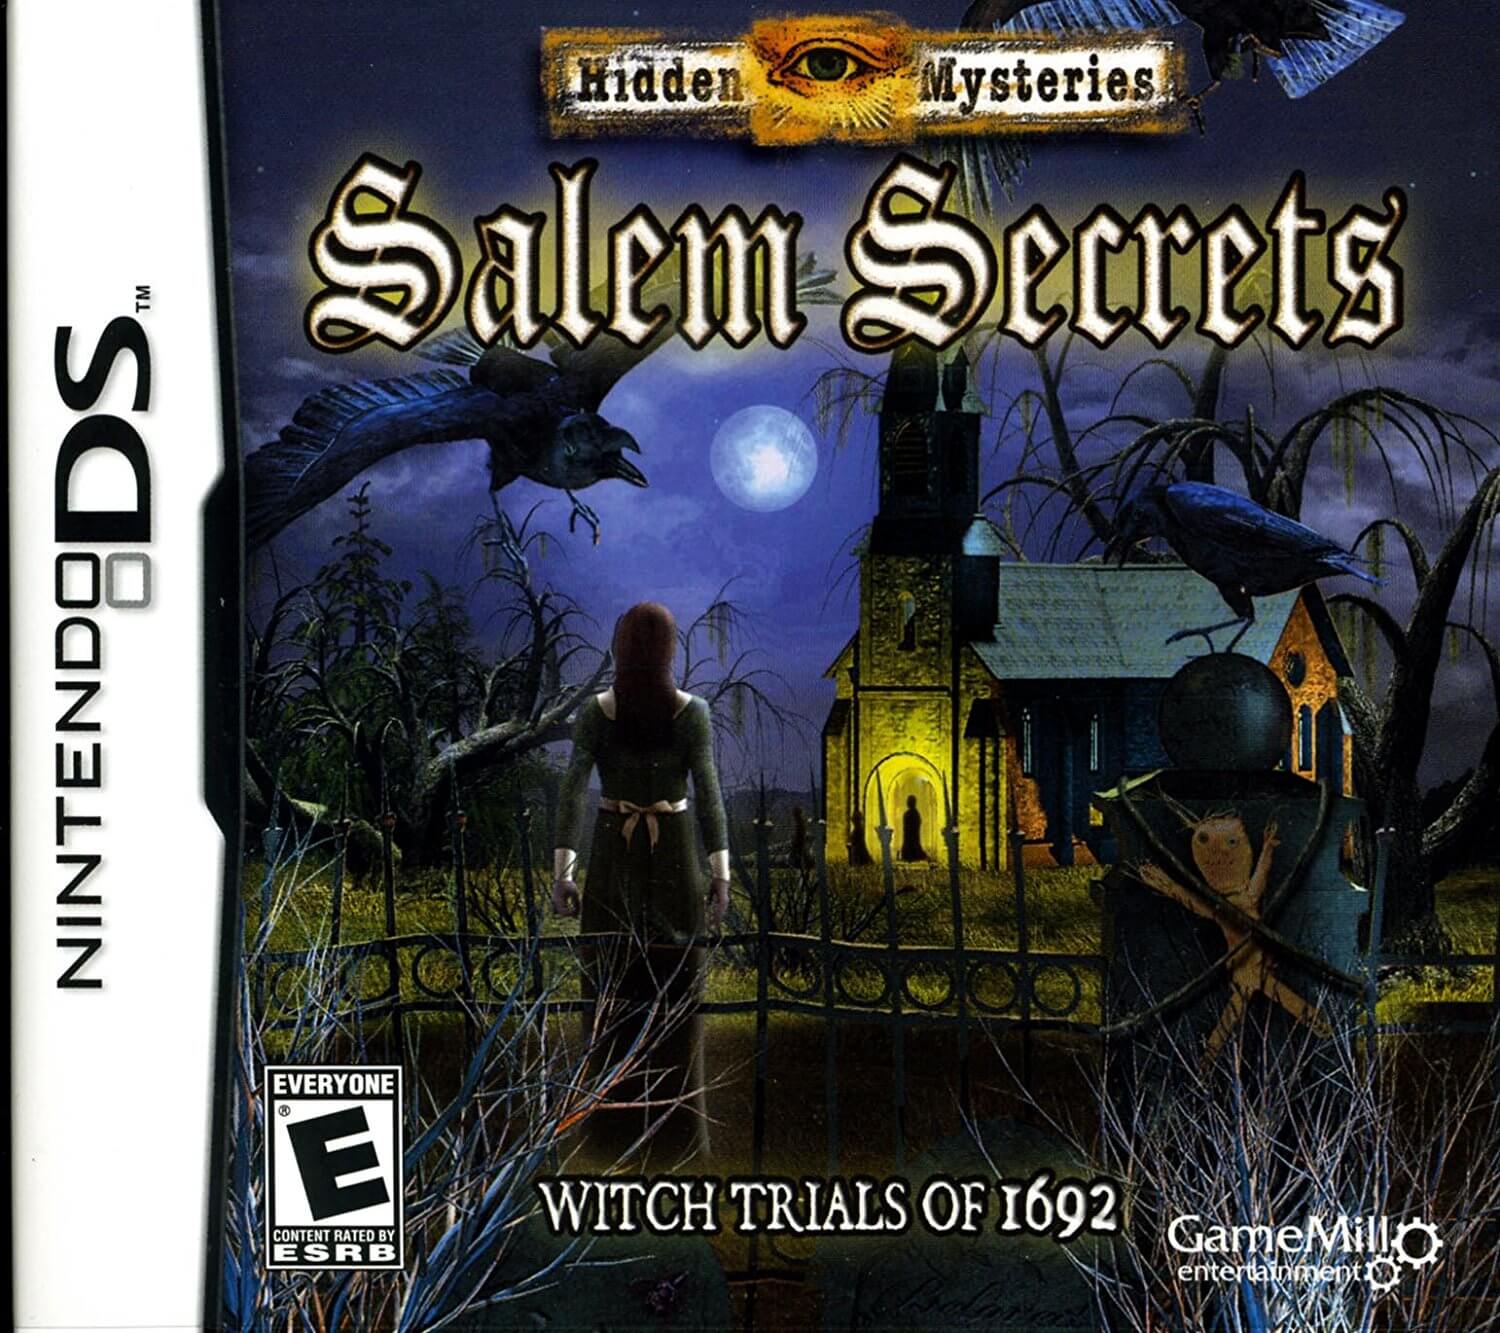 hidden-mysteries-salem-secrets-witch-trials-of-1692-nintendods-nds-rom-download